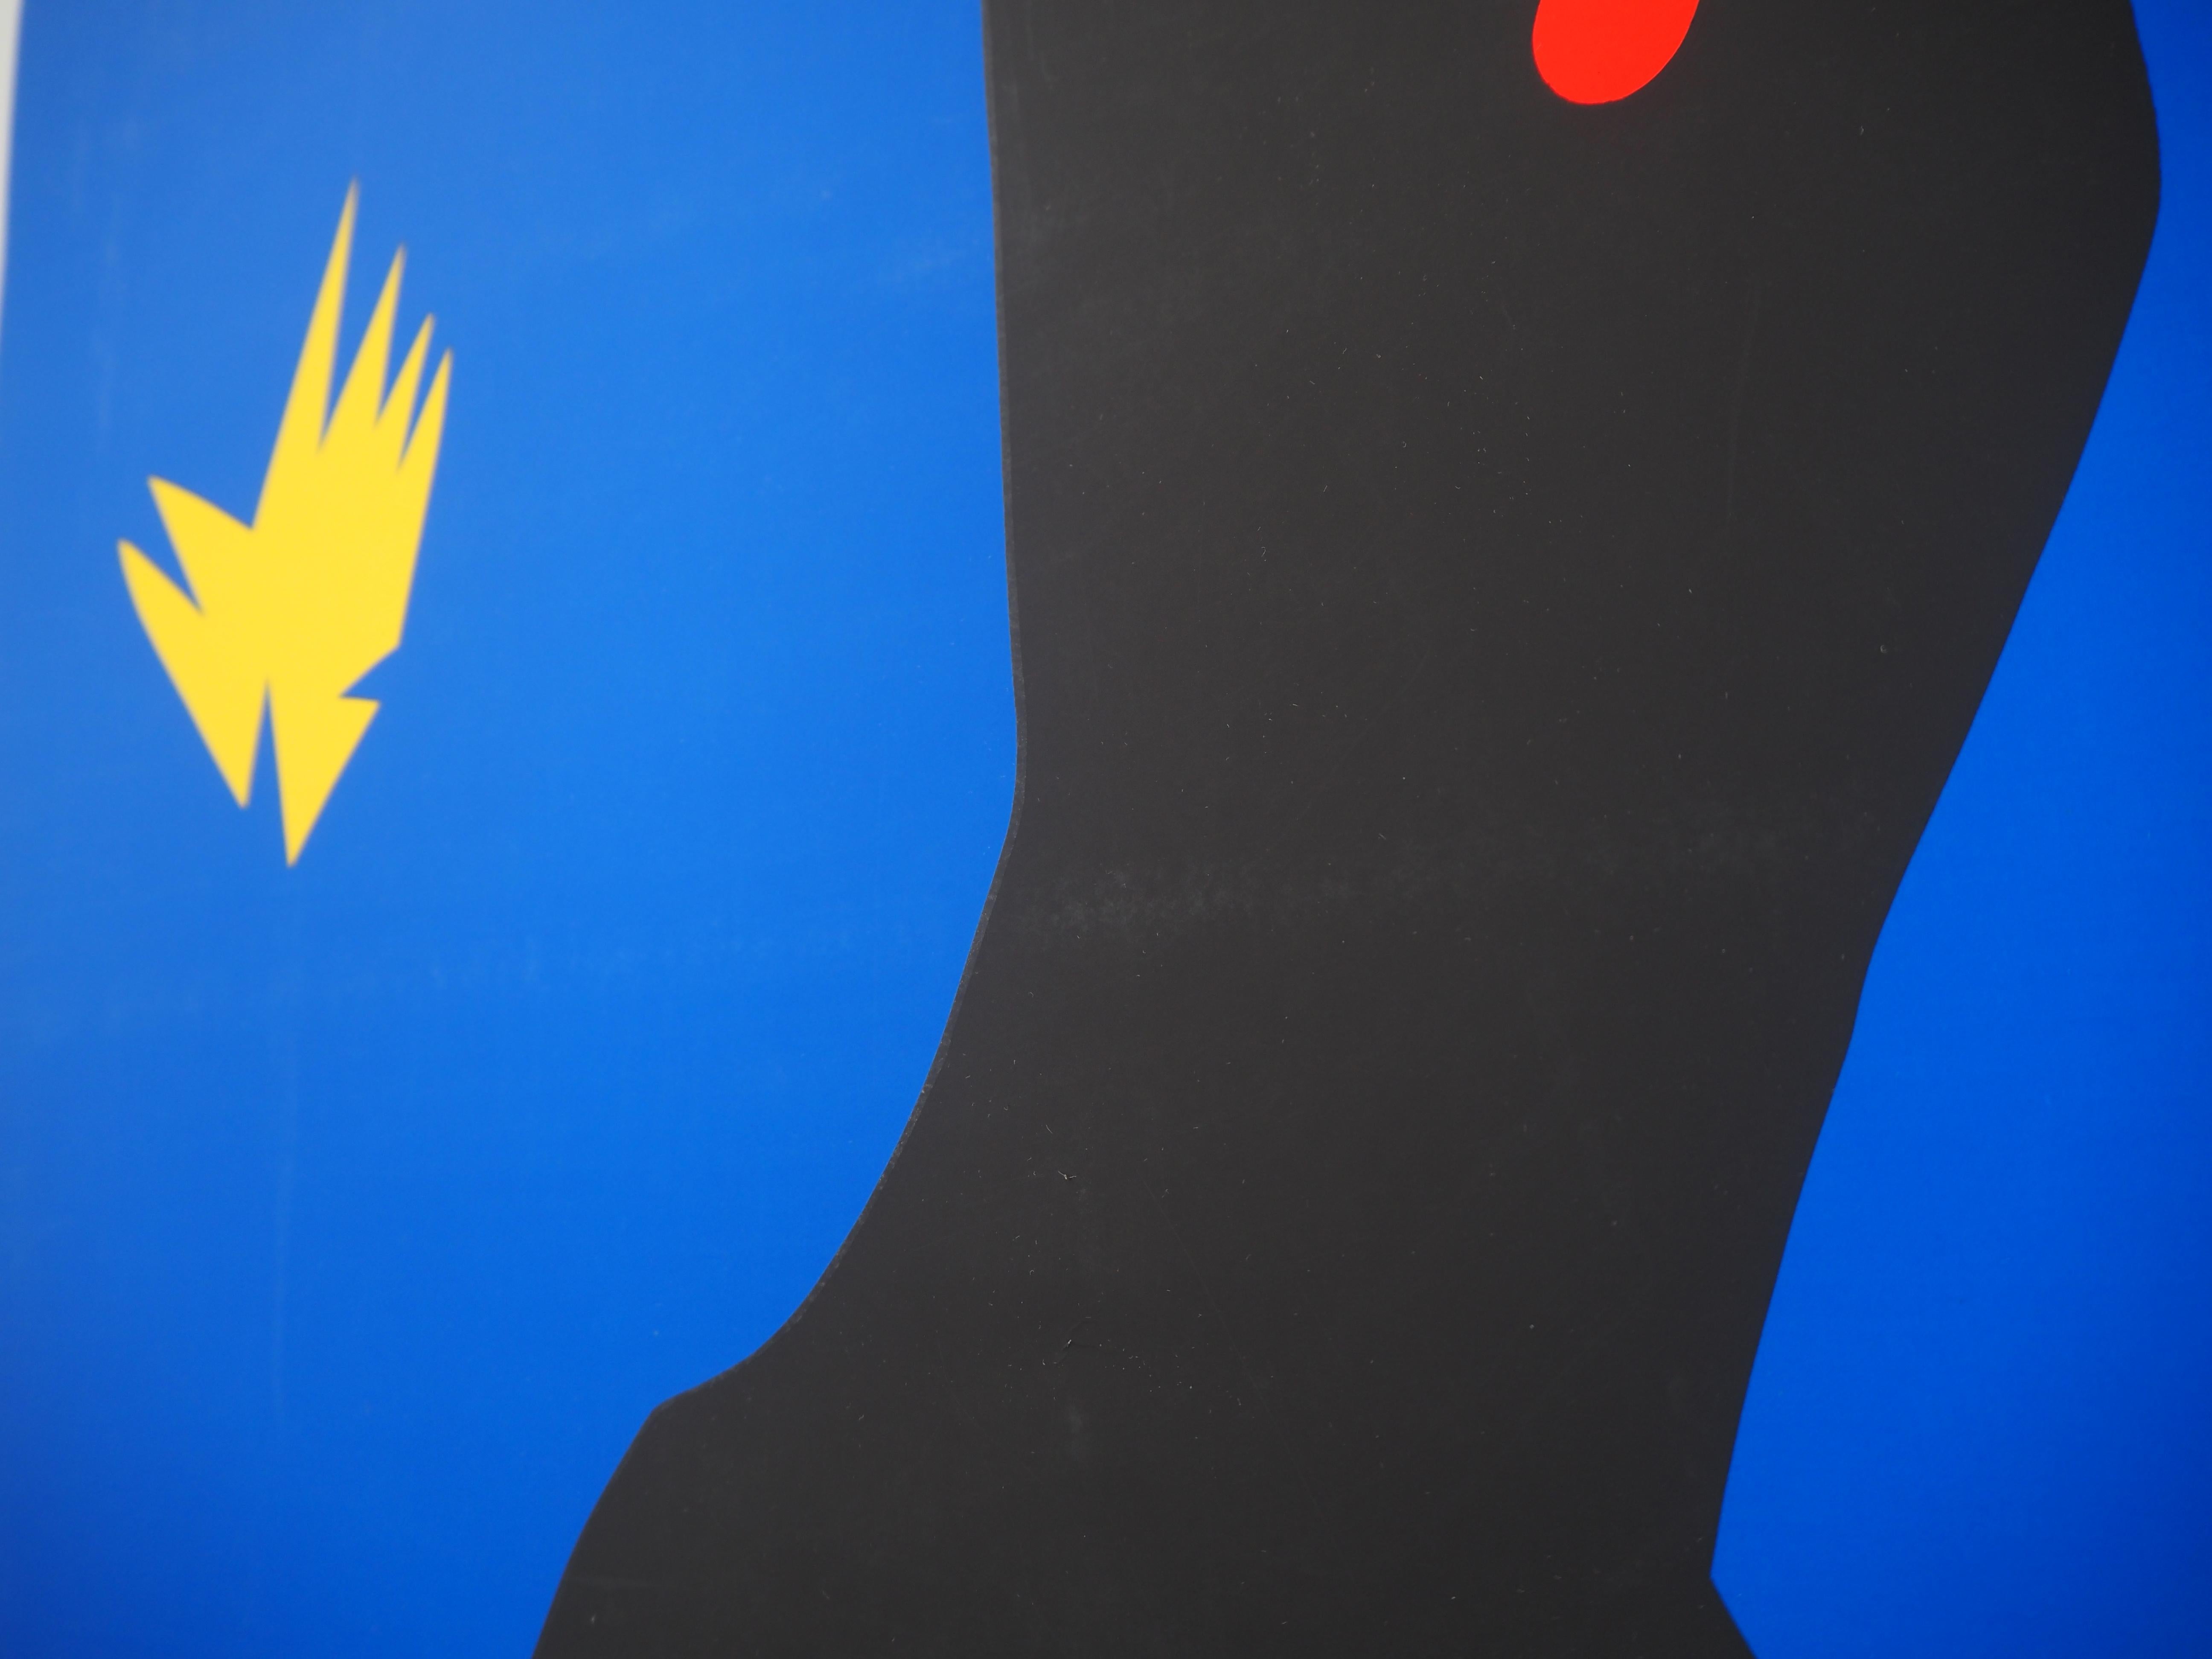 Icarus in the Stars - Screen Print - Blue Figurative Print by Henri Matisse